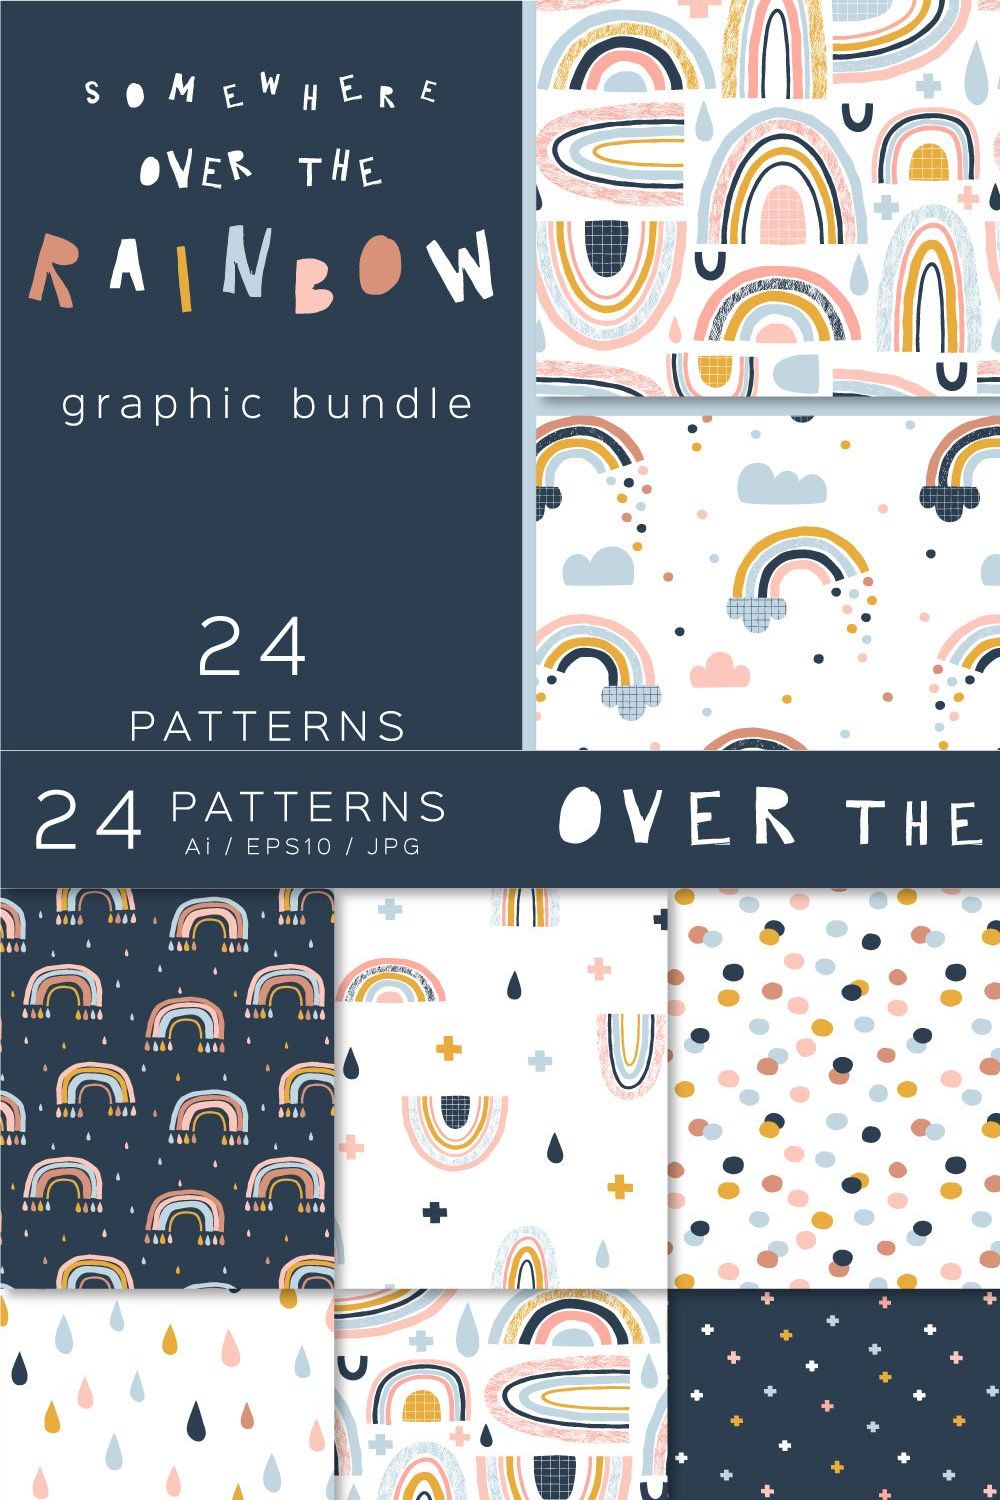 Rainbow clipart & pattern set pinterest preview image.